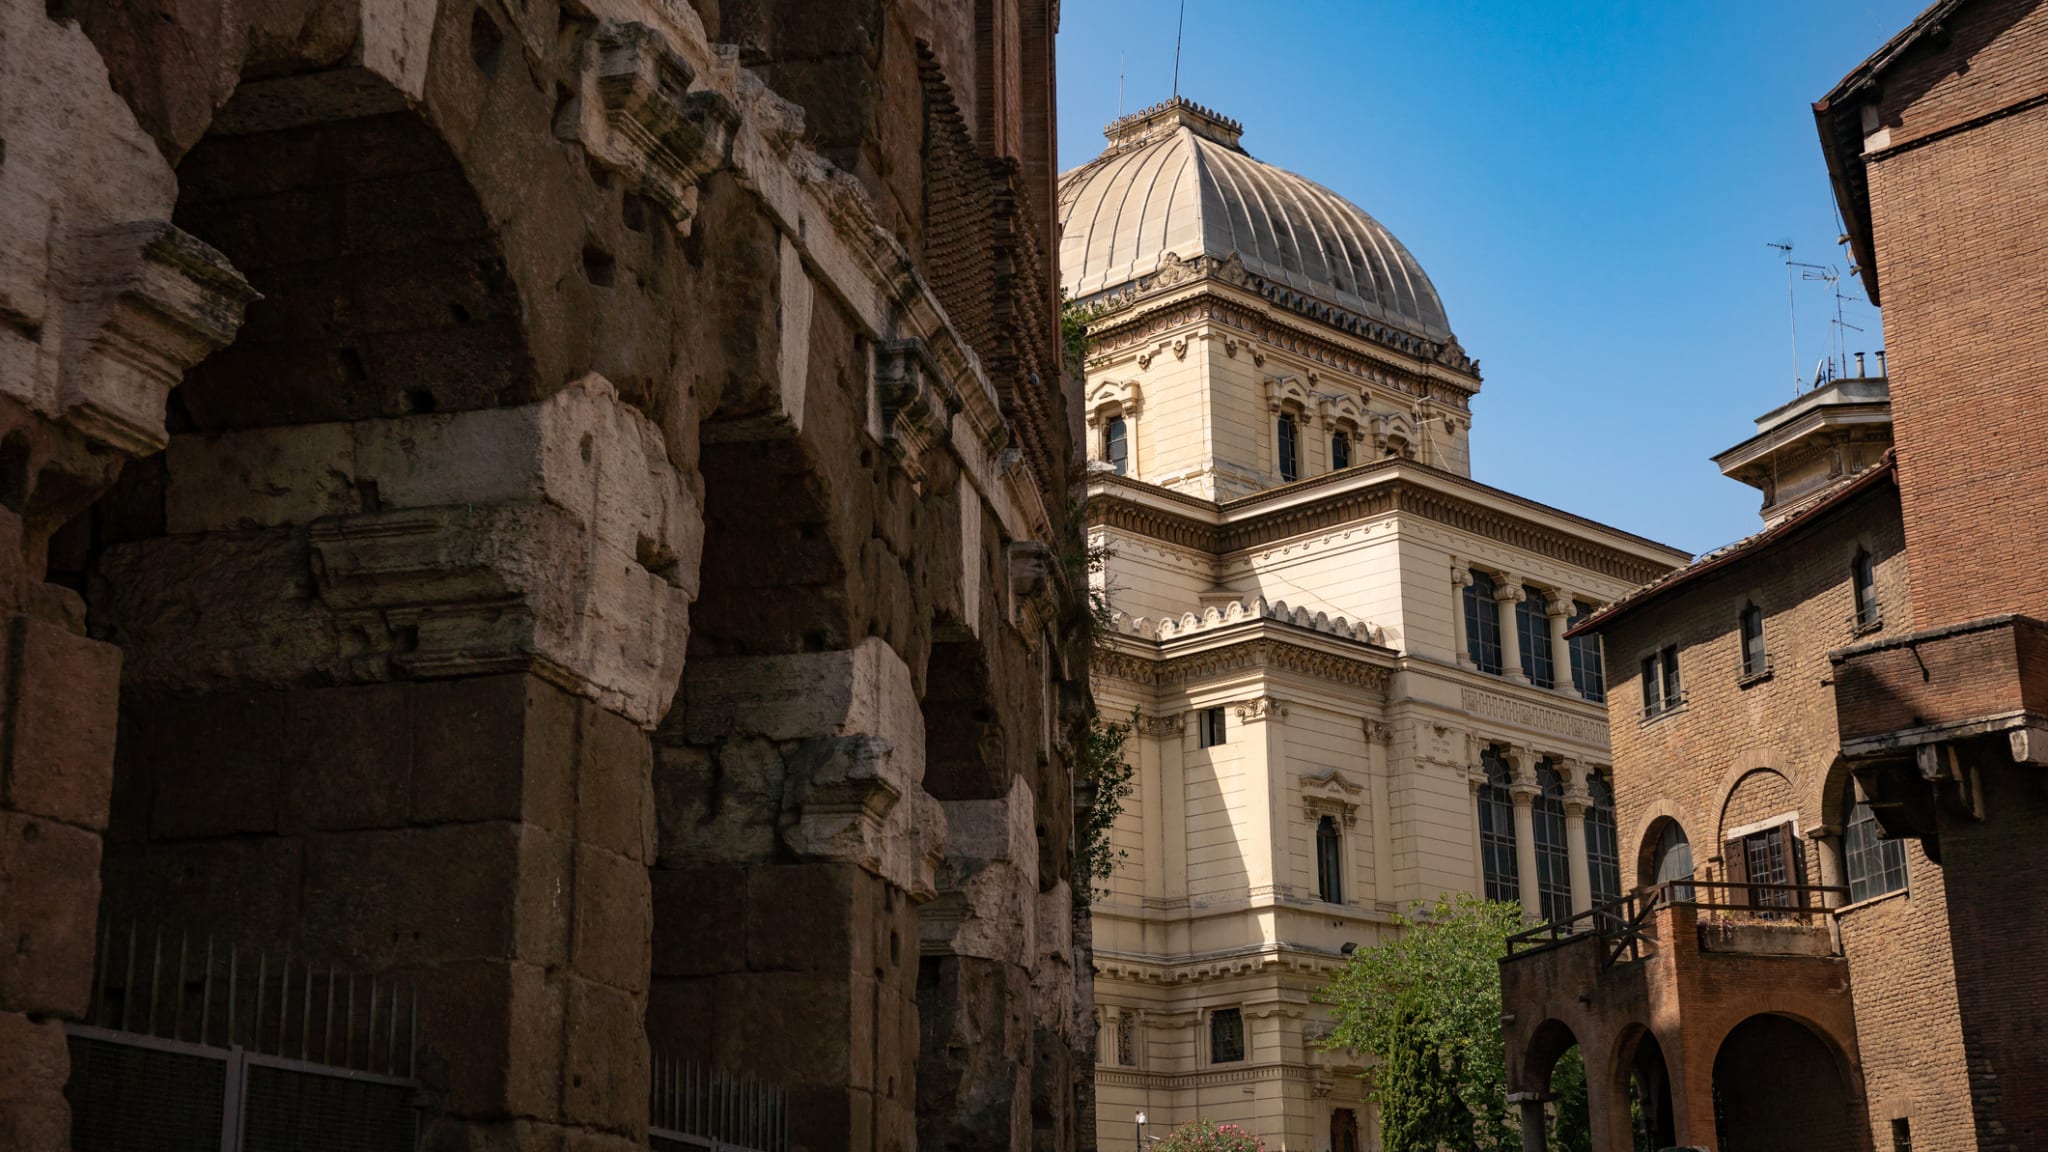 Blick auf die jüdische Synagoge Tempio Maggiore di Roma ©naphtalina/iStock / Getty Images Plus via Getty Images